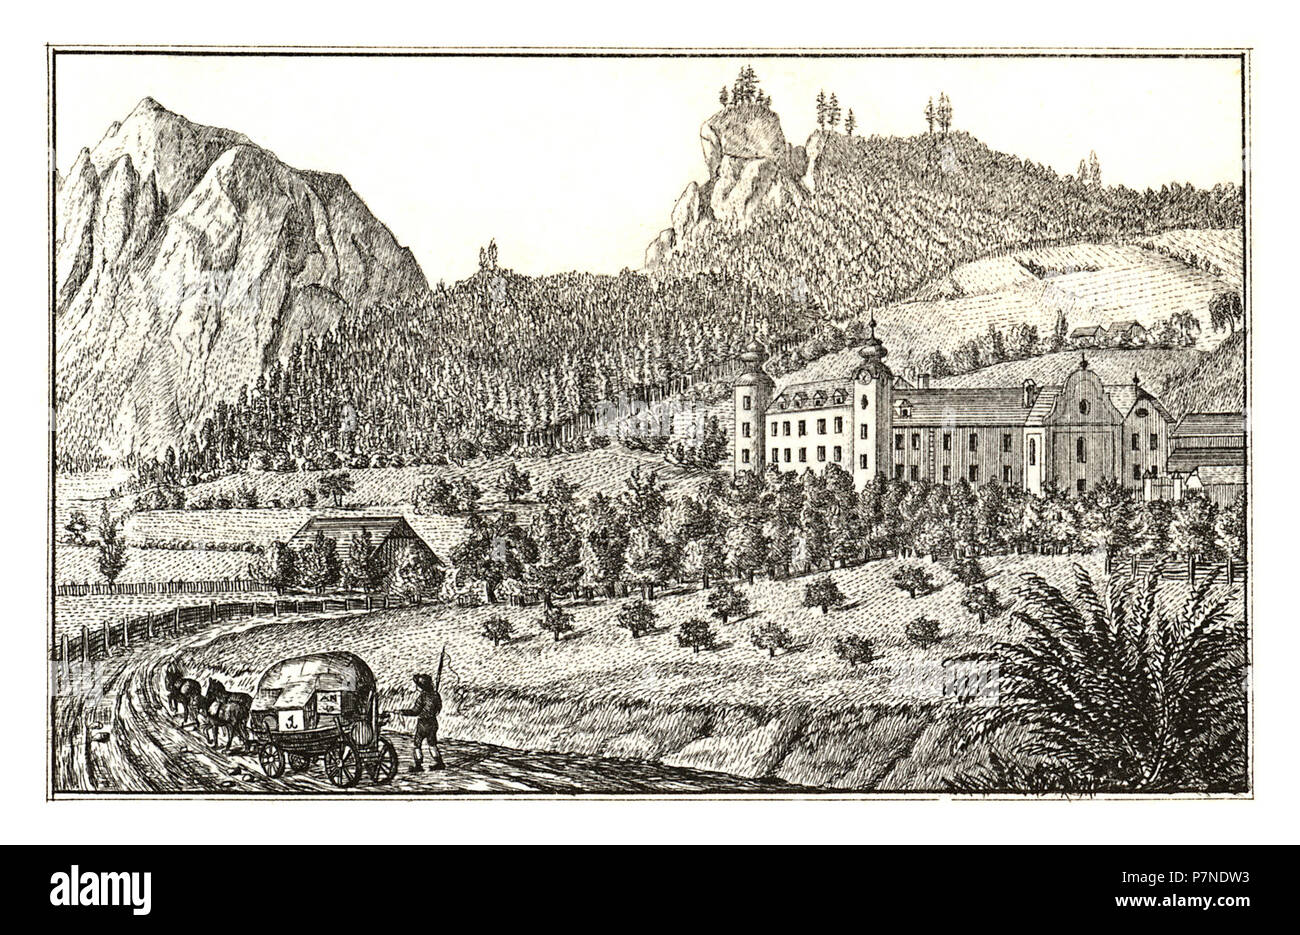 285 Schloss Stainach, Ober-Stainach, gez. S. Kölbl - J.F.Kaiser Lithografirte Ansichten der Steiermark 1830. Stock Photo